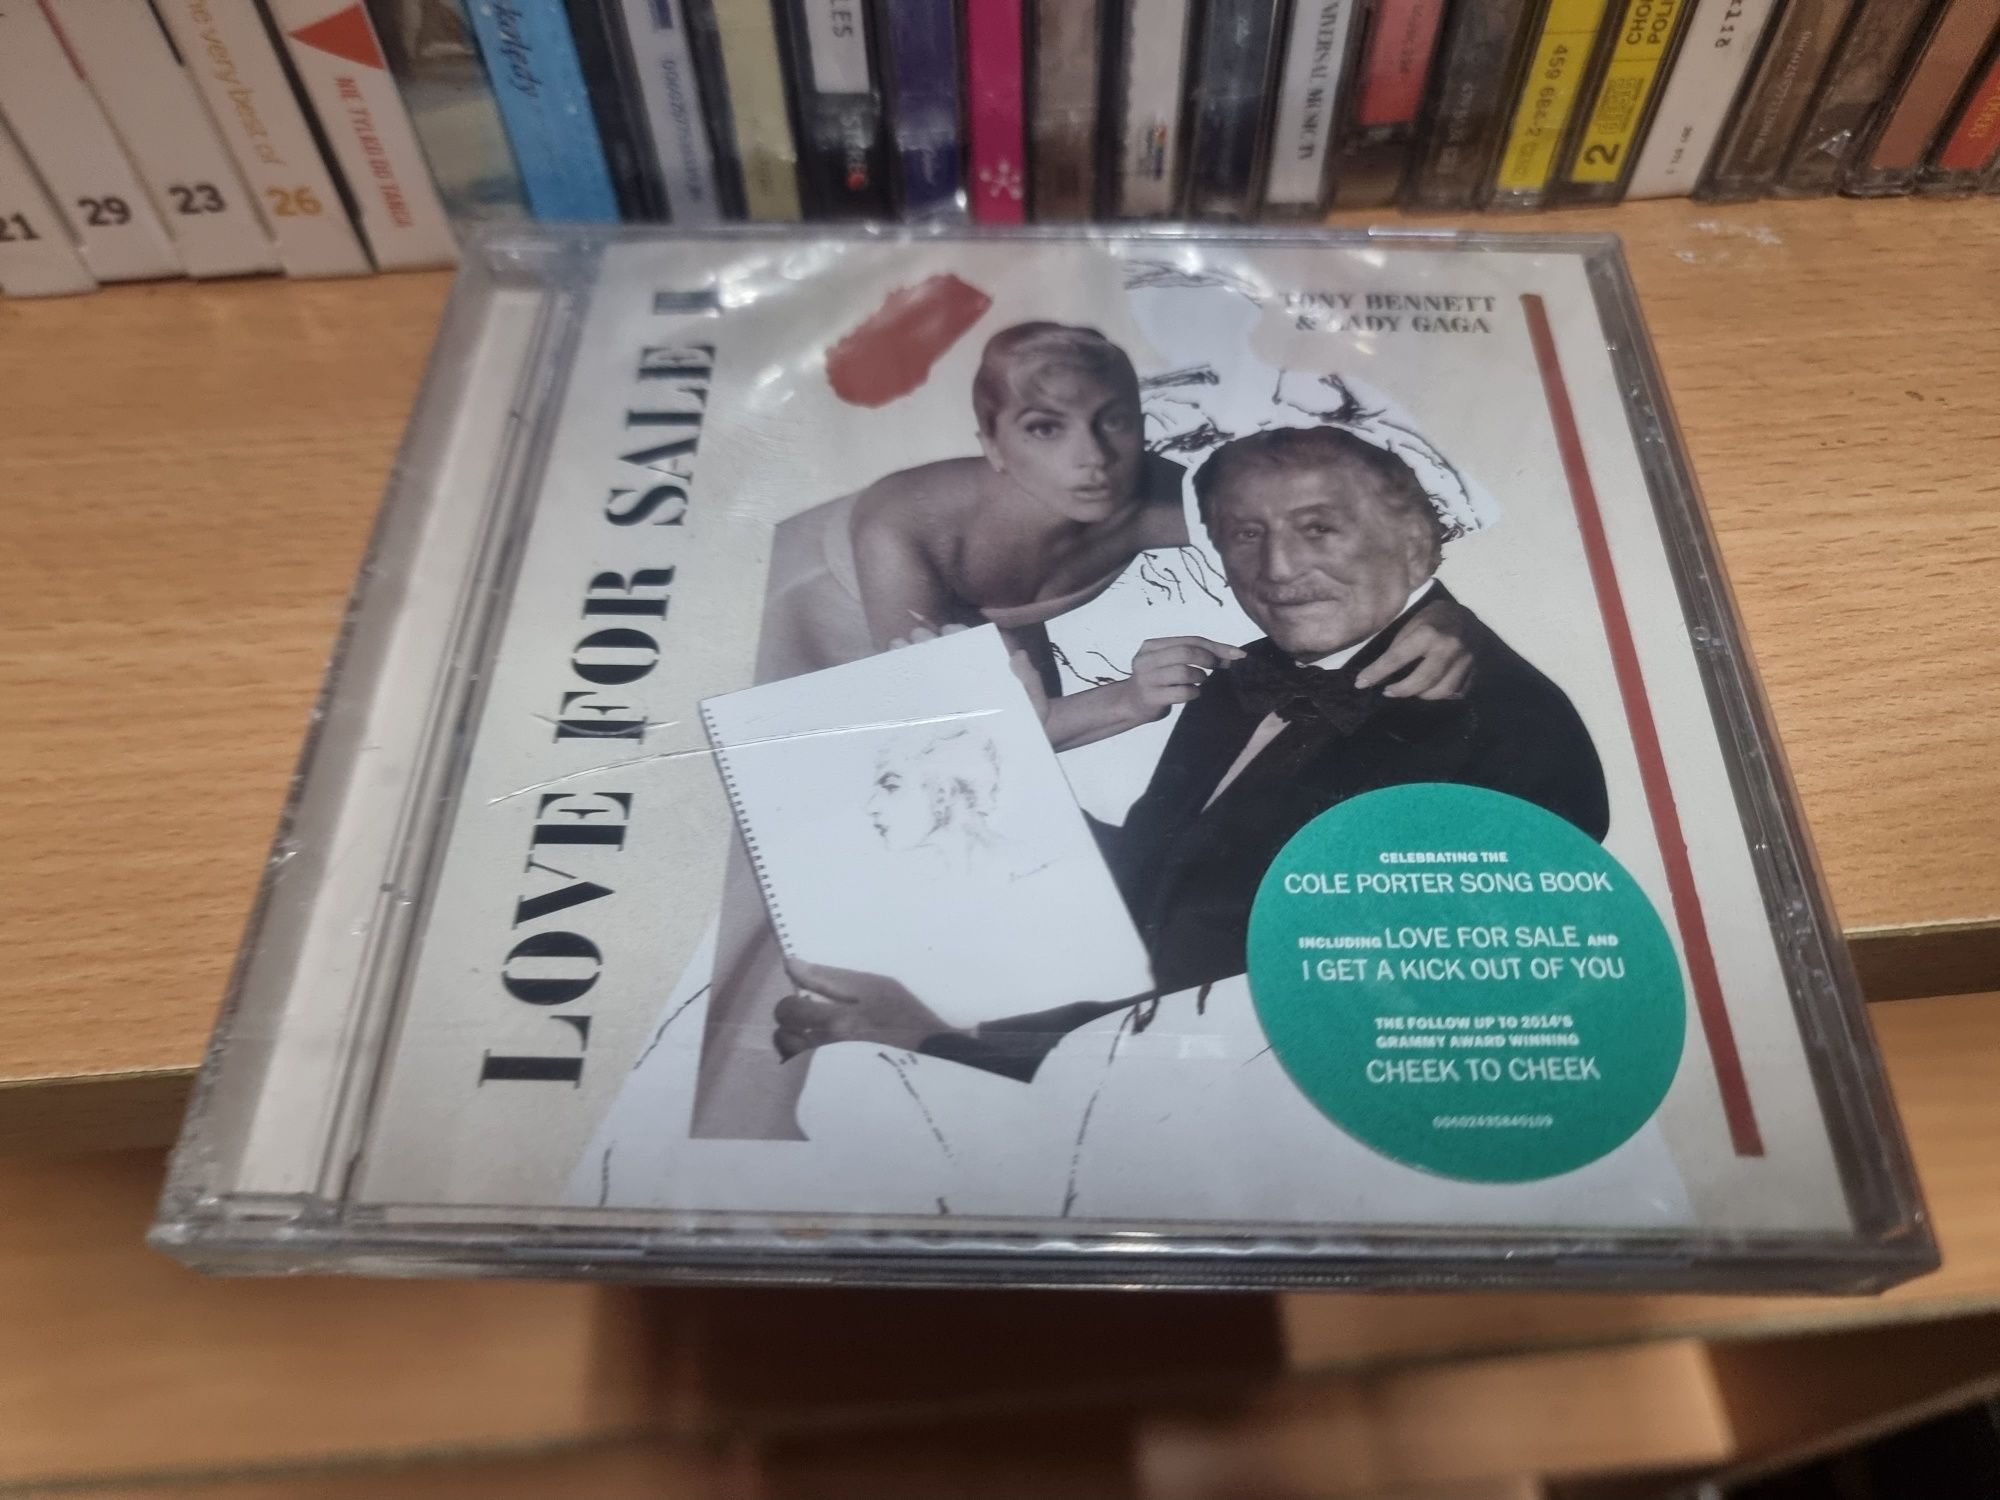 Lady Gaga & Tony Bennett Love for sale Nowa płyta CD